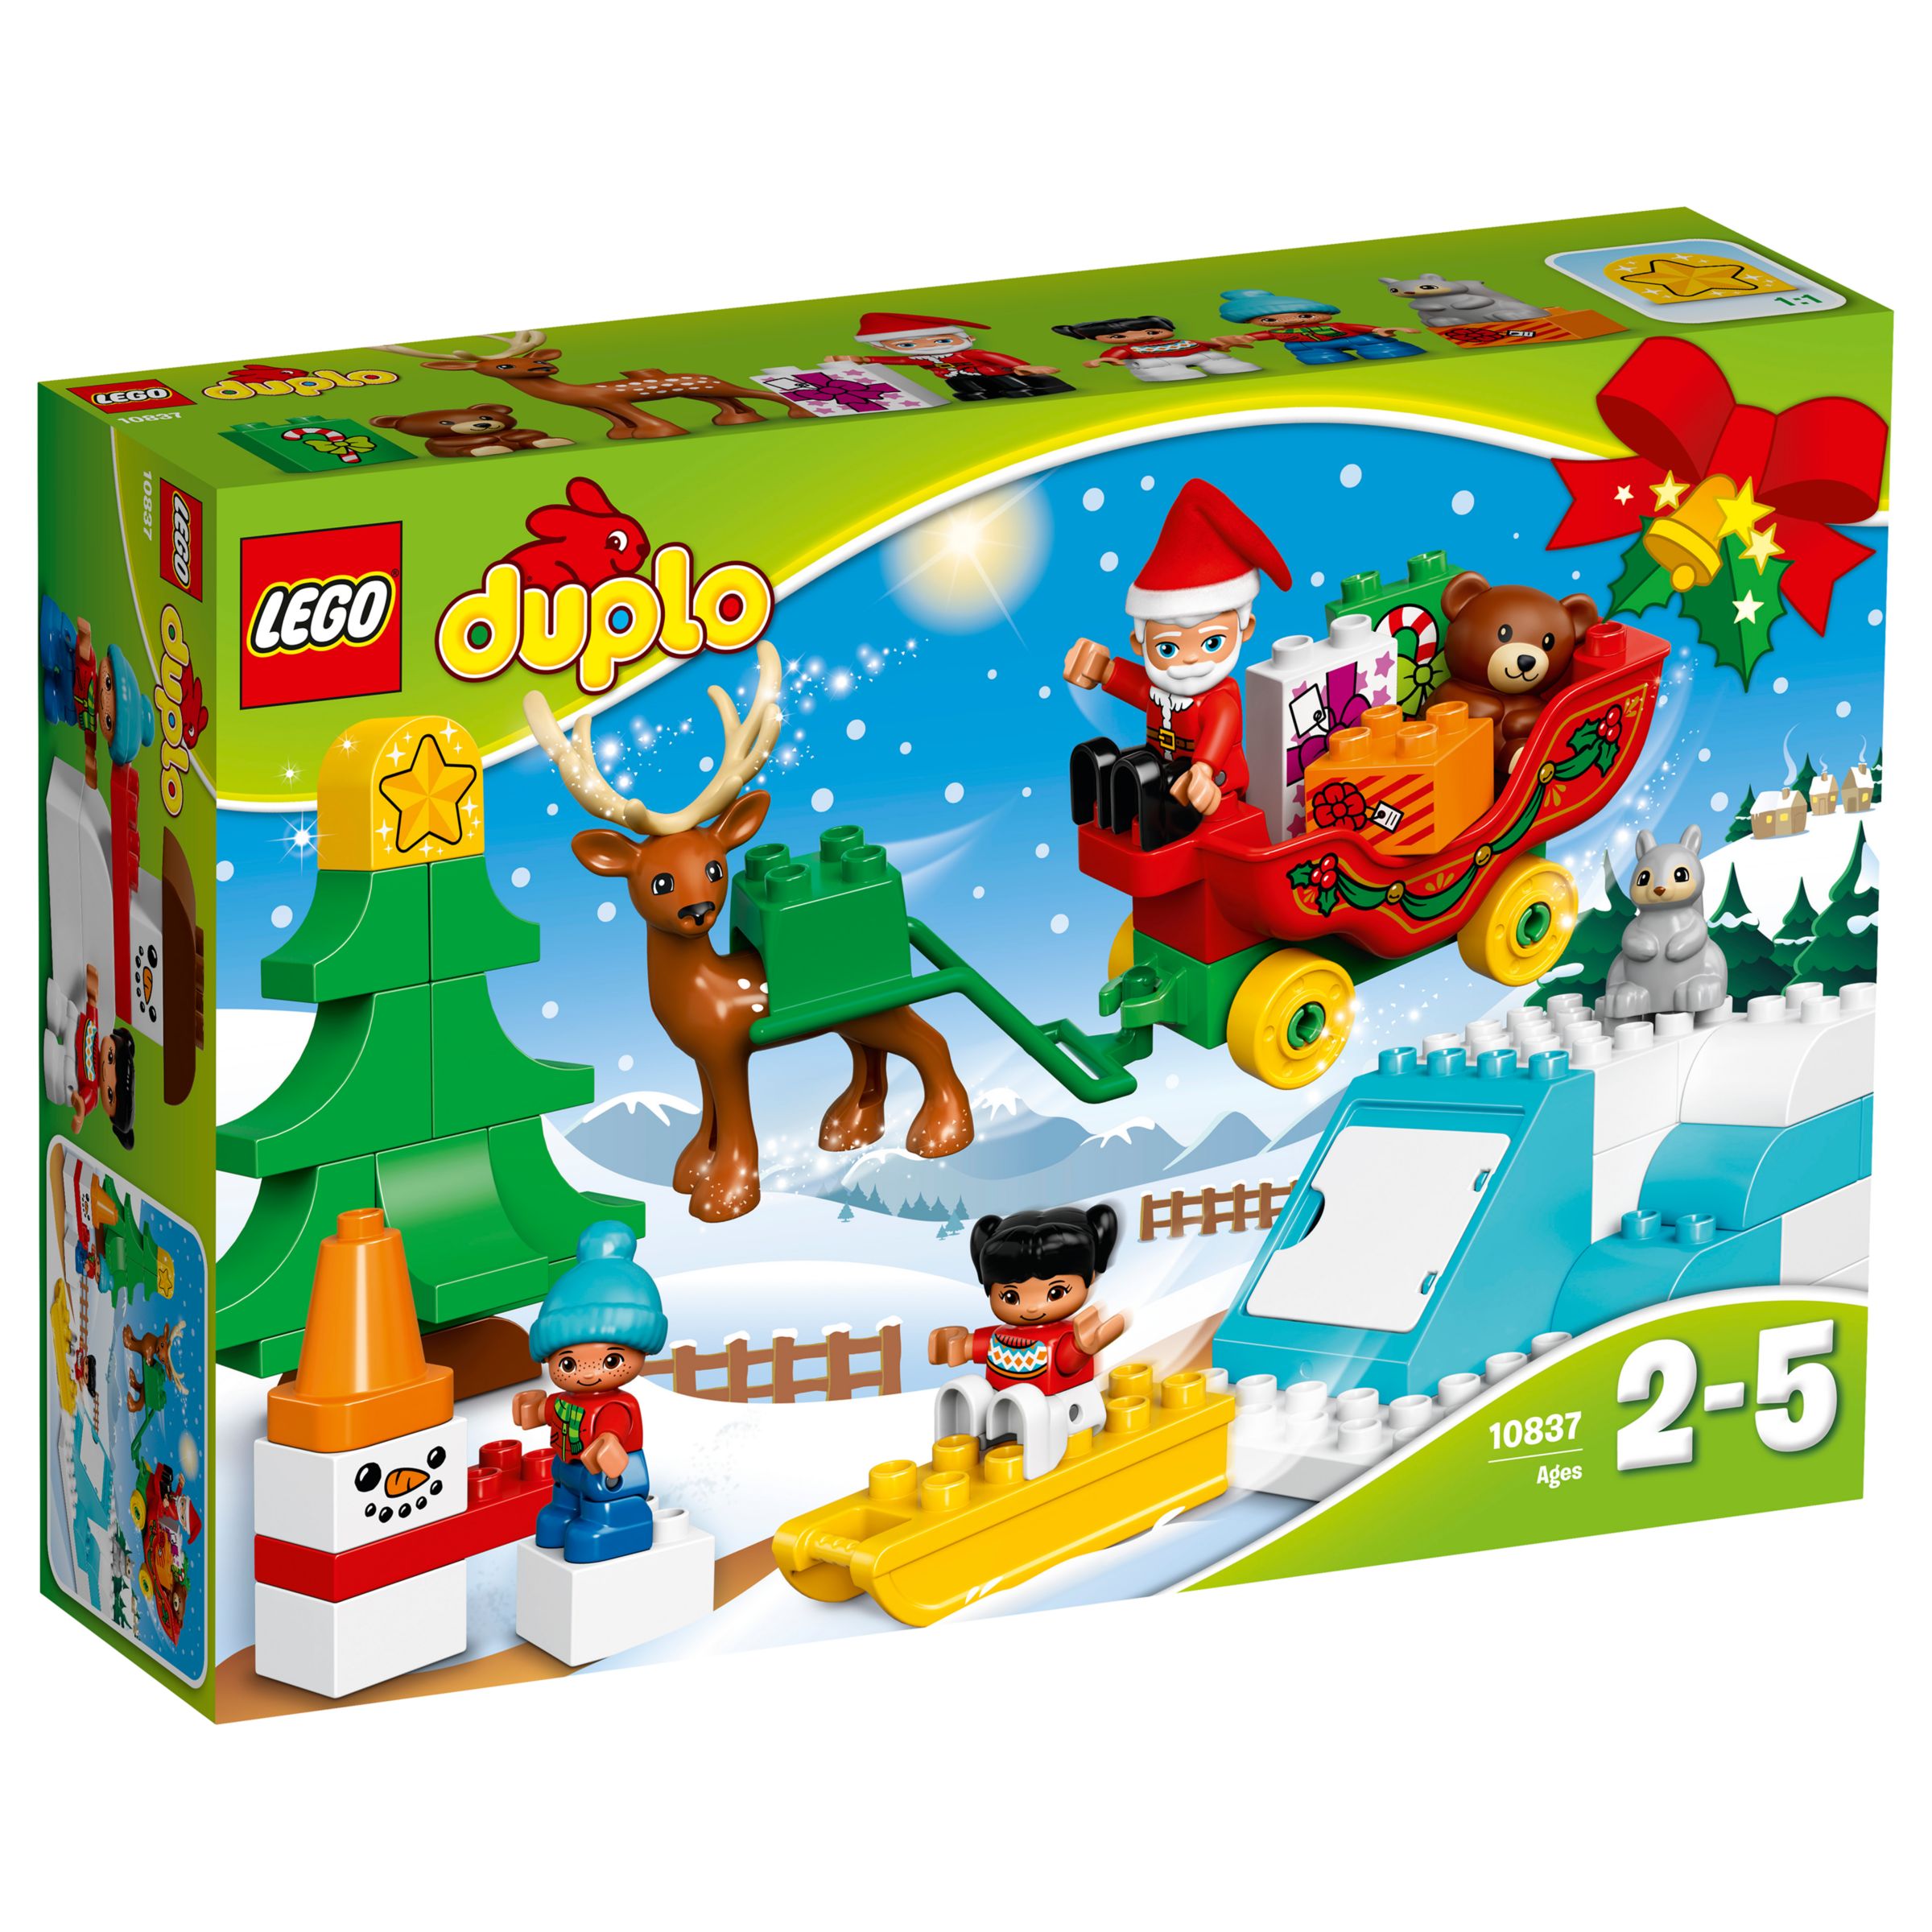 LEGO DUPLO 10837 Santa's Winter Holiday 